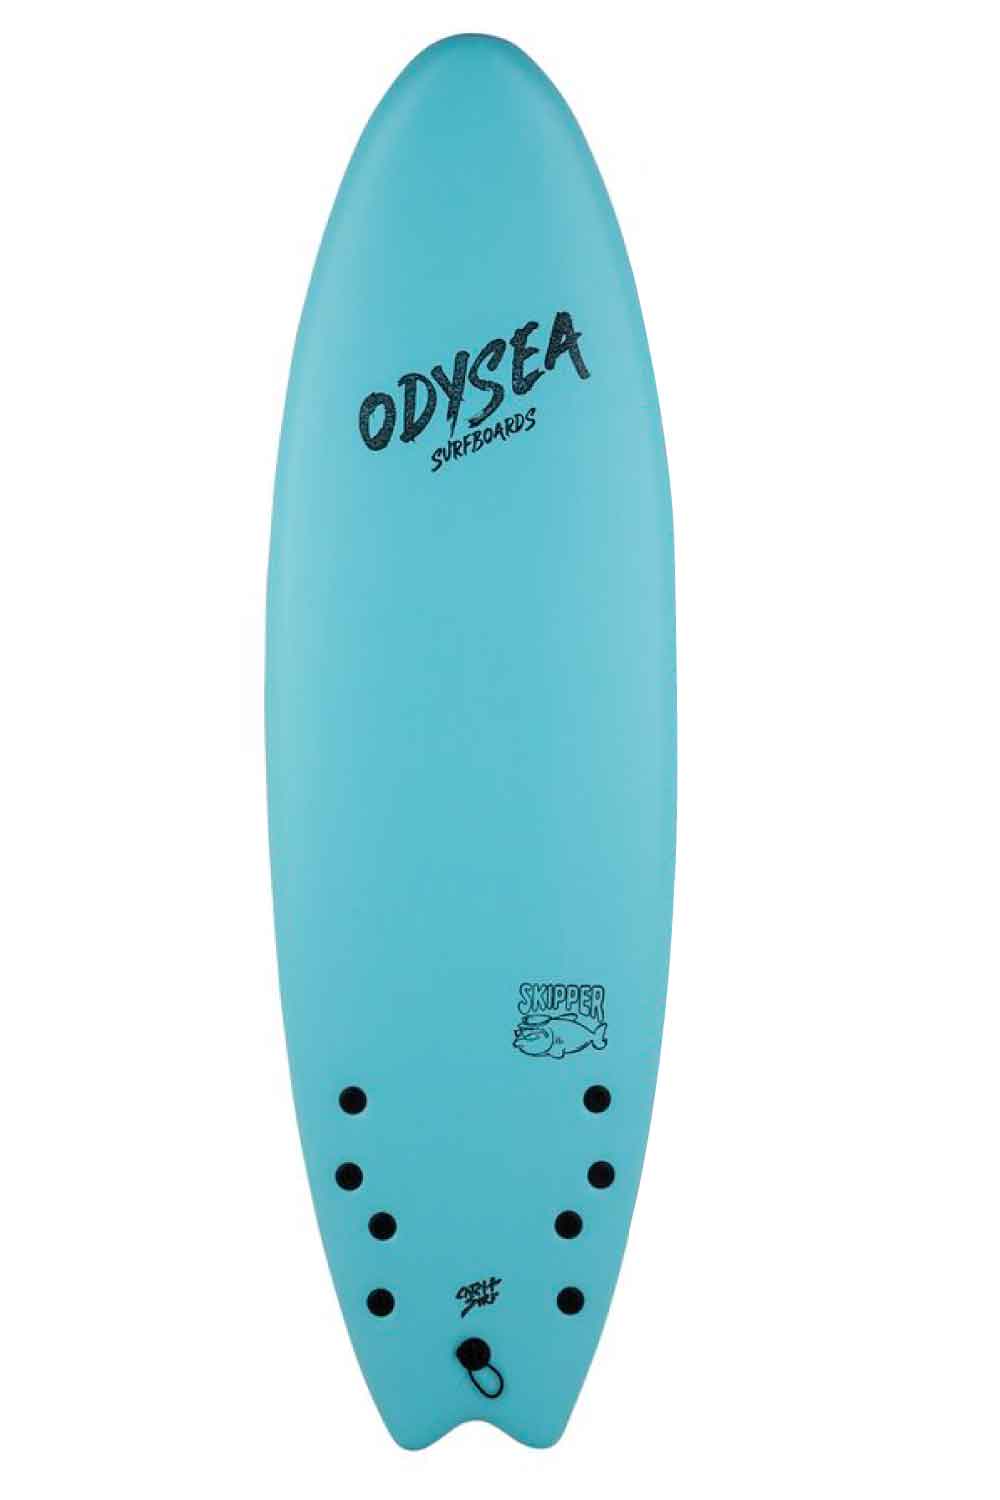 Catch Surf Odysea JOB Jamie O'Brien Skipper Pro Quad 6'6 Softboard - Comes with fins